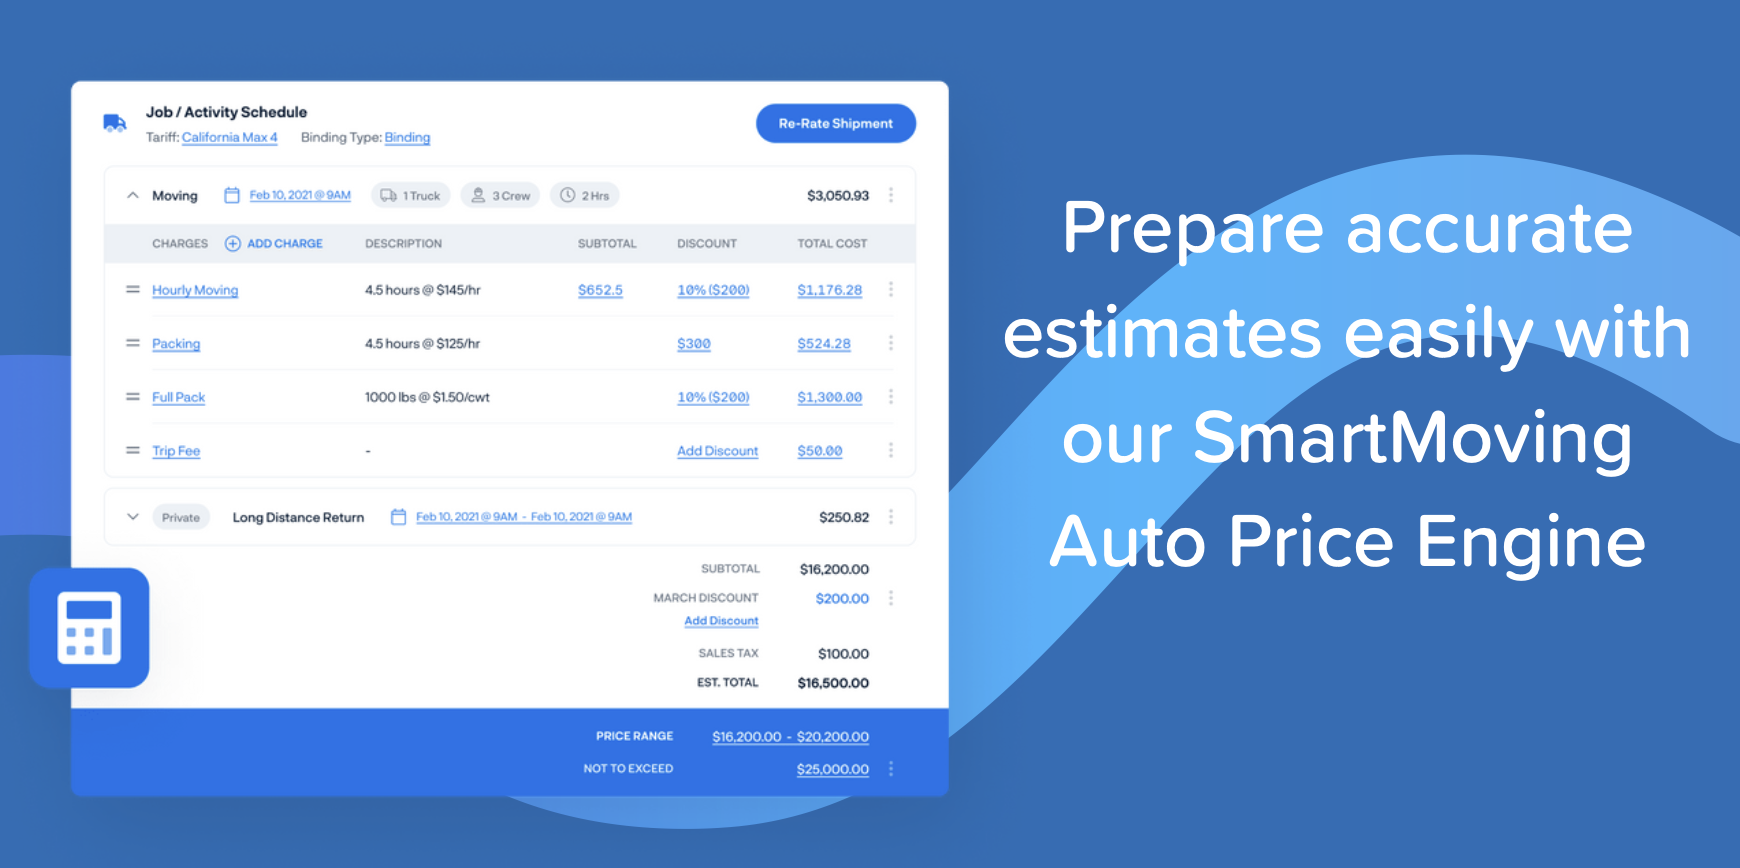 Prepare accurate estimates easily with our SmartMoving Auto Price Engine